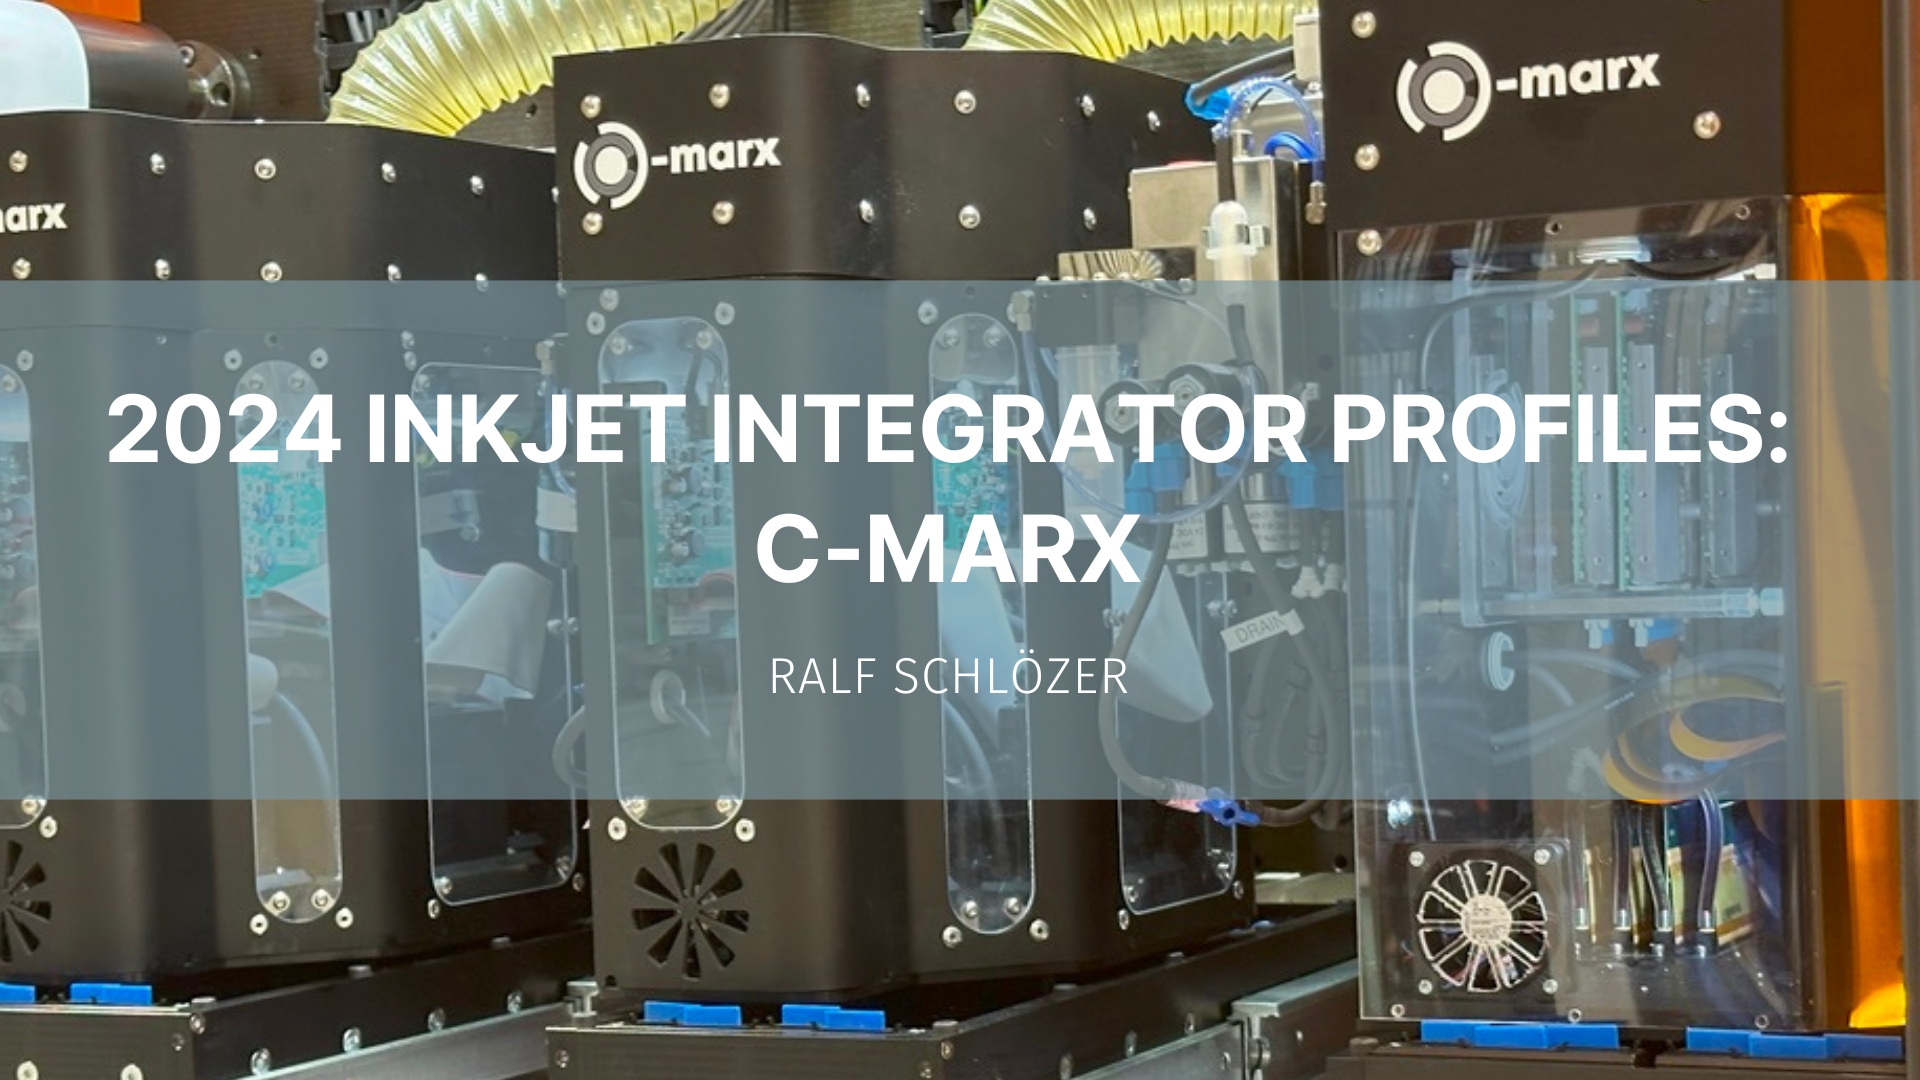 Featured image for “2024 Inkjet Integrator Profiles: C-marx”